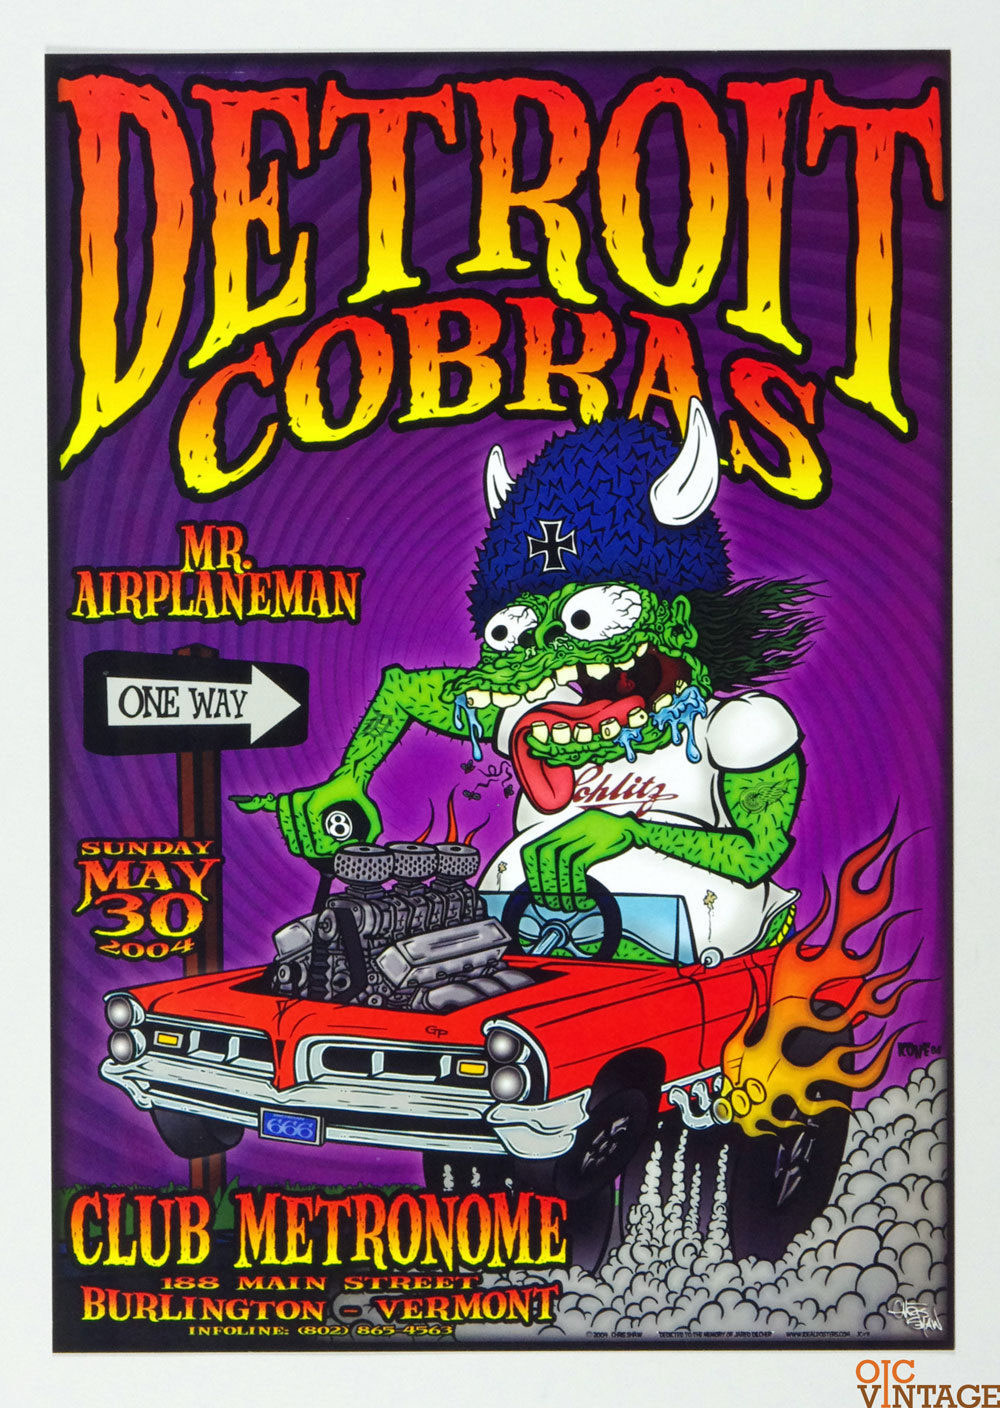 Detroit Cobras Handbill Club Metronome 2004 May 30 Chris Shaw